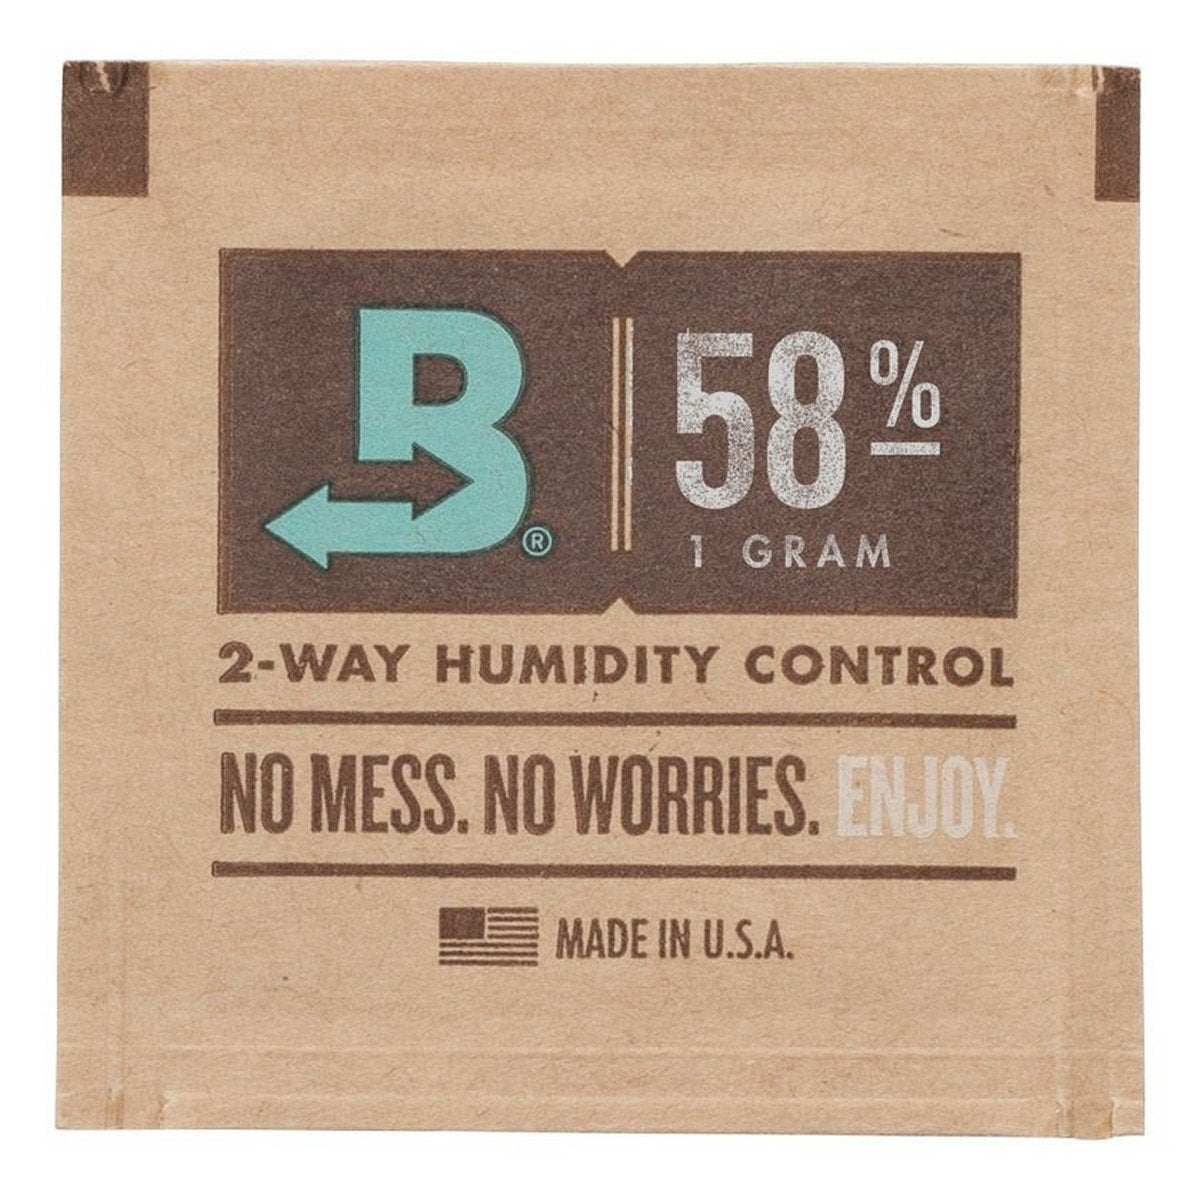 Boveda 58% Humidity Packs, Keep ½ Oz of Weed Fresh